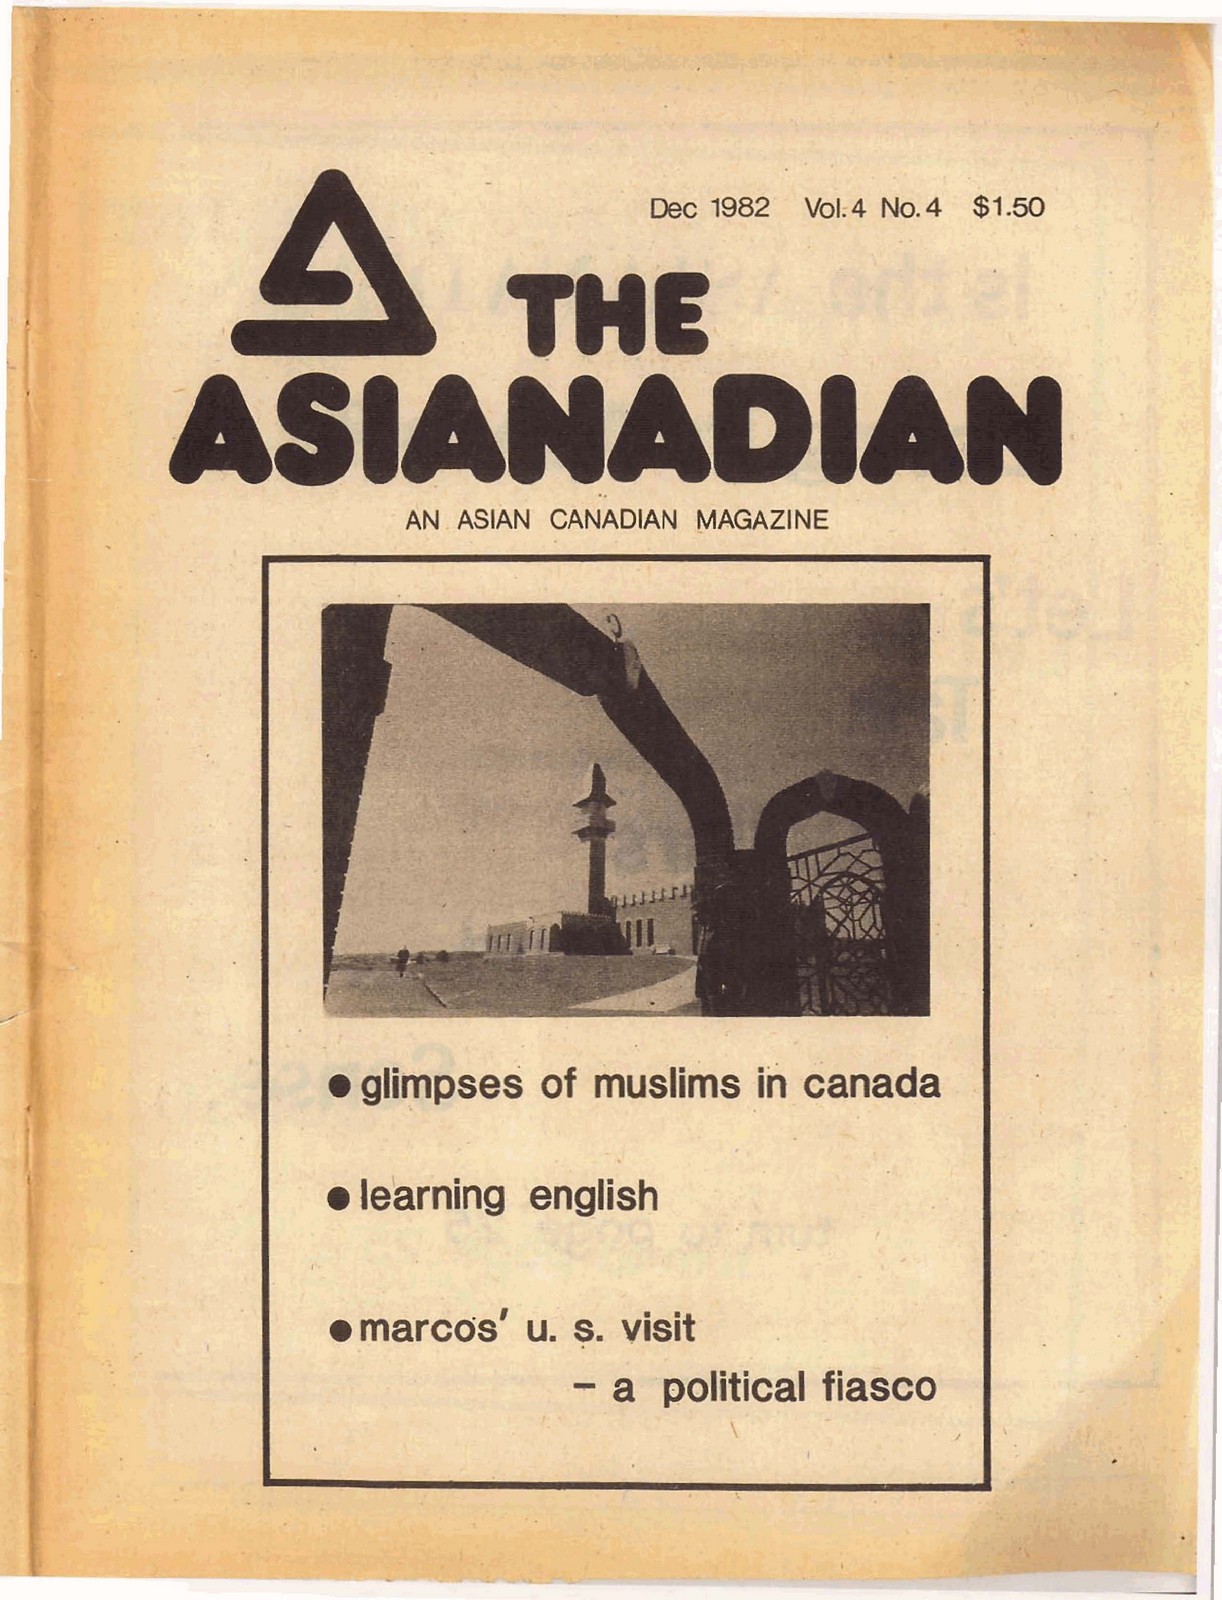 Vol 4 No 4 – The Asianadian